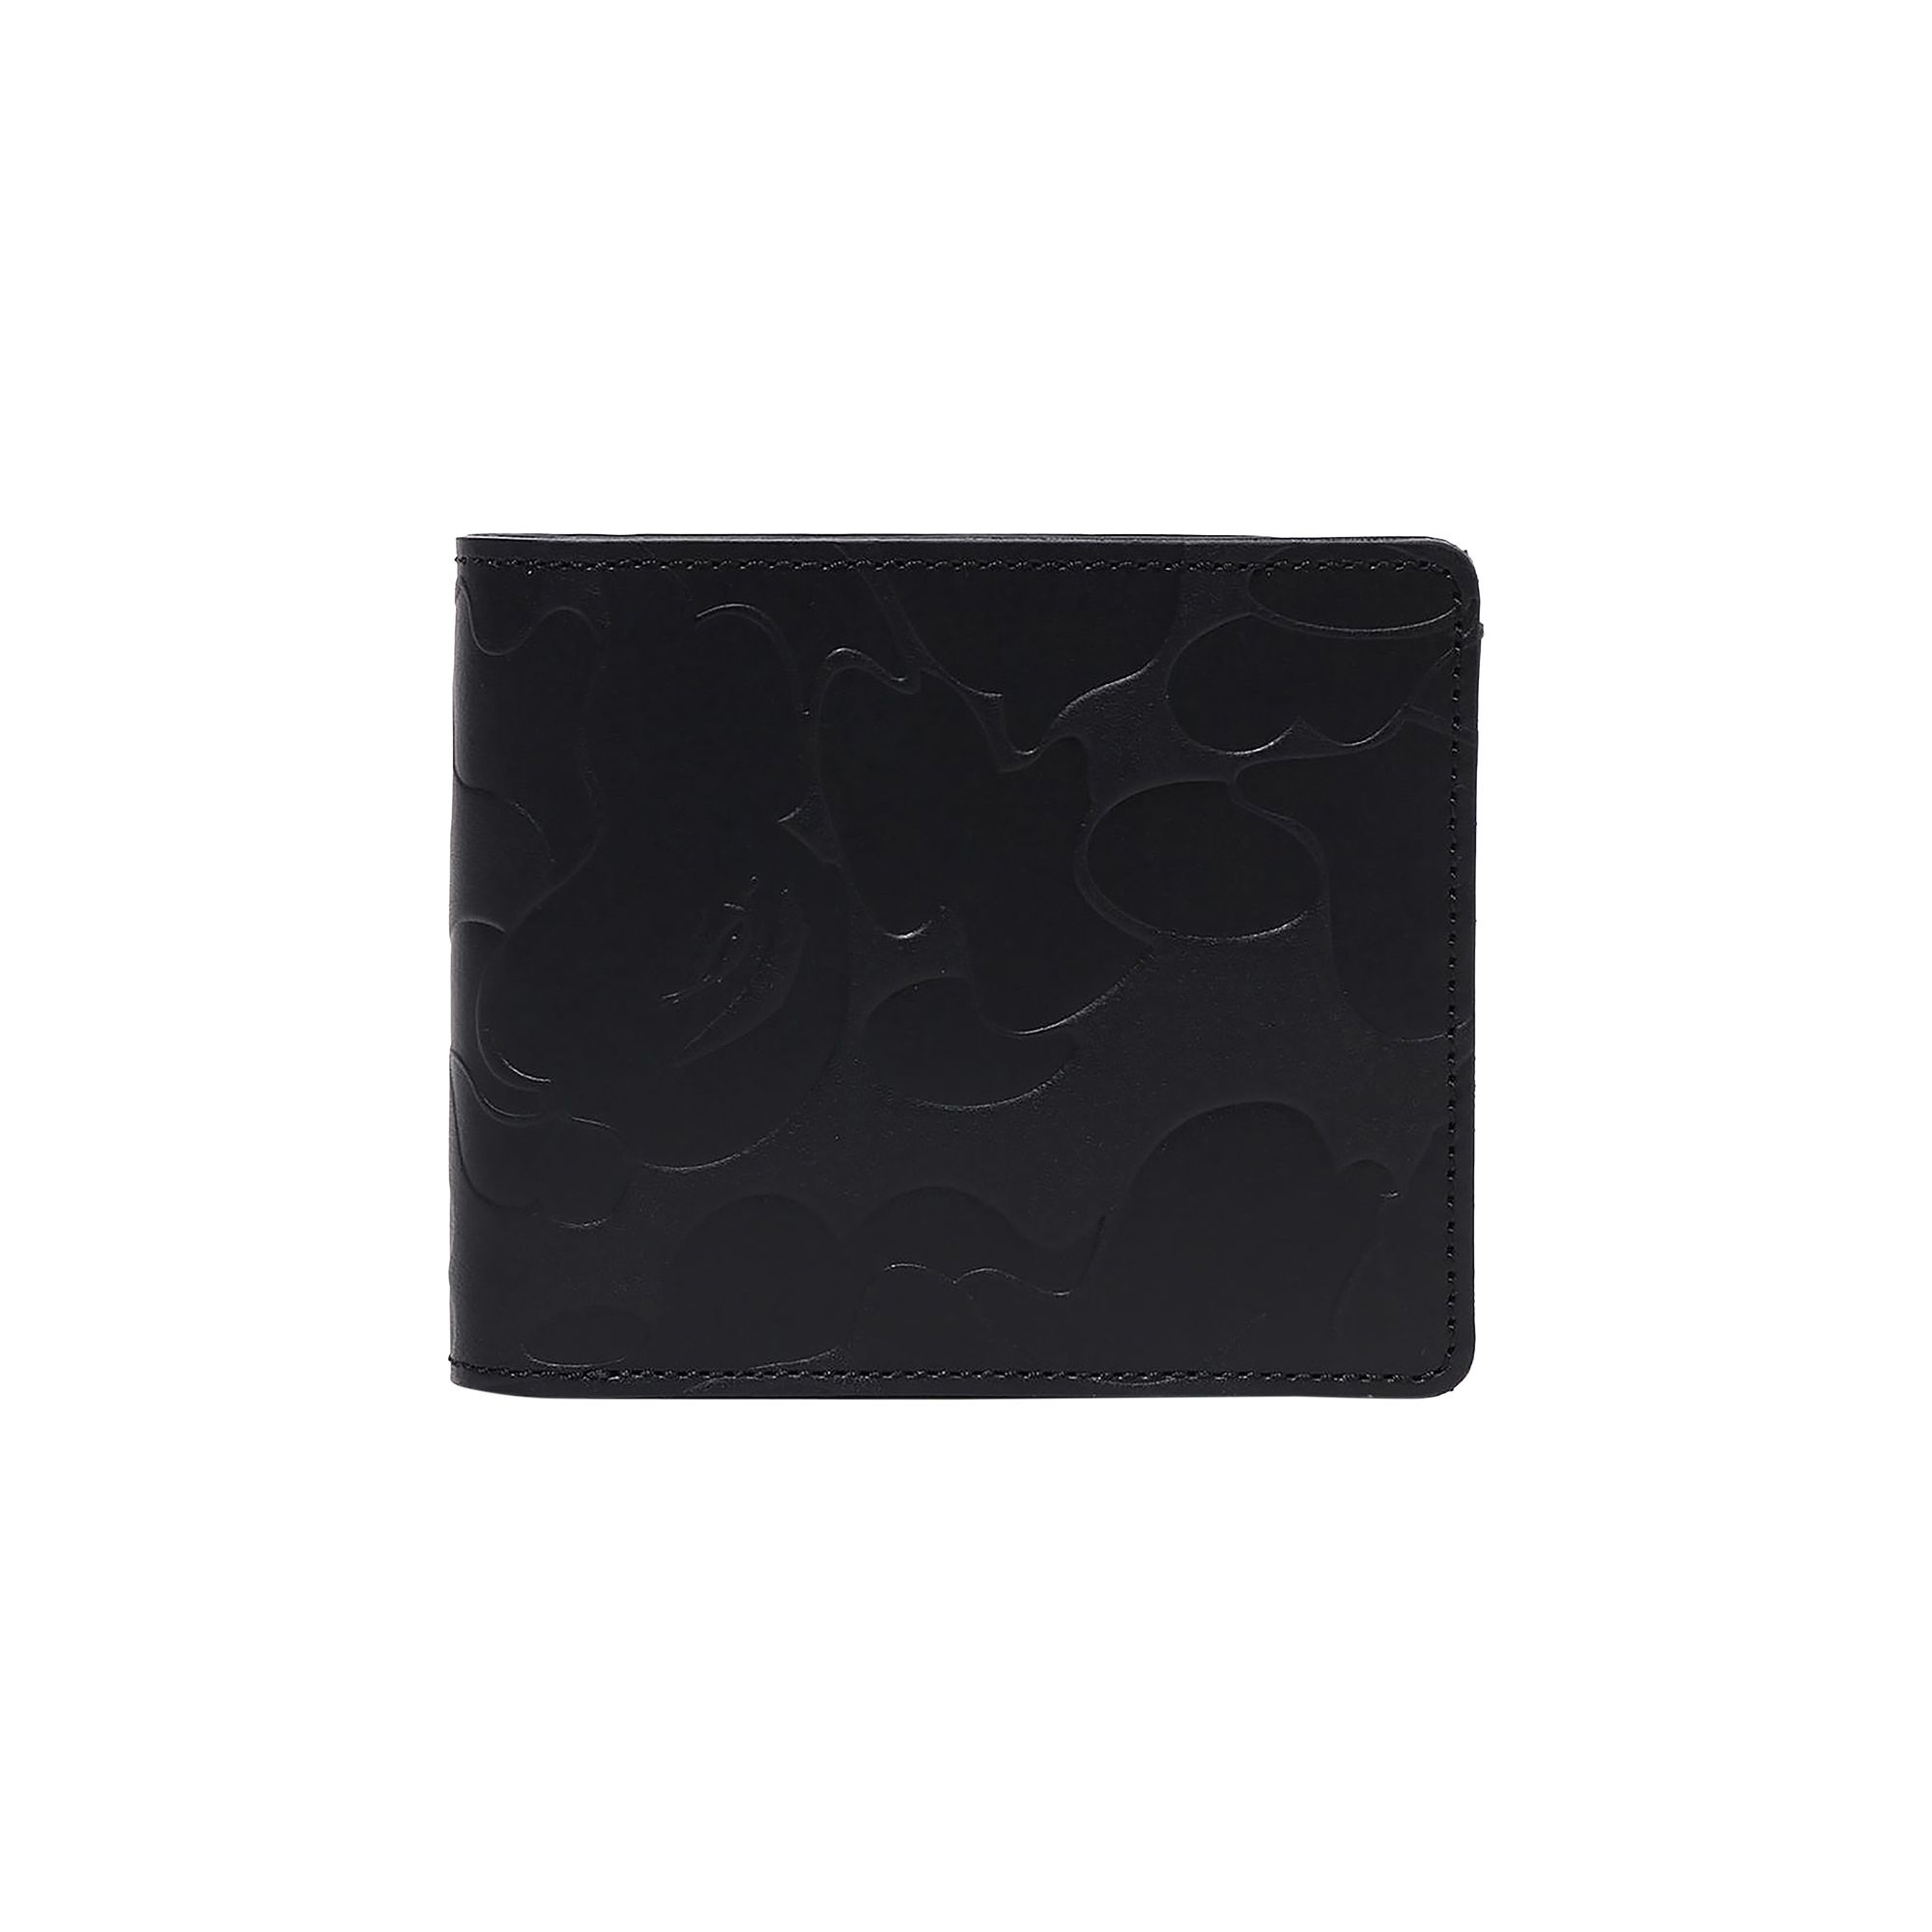 BAPE Solid Camo Leather Wallet #1 'Black' - 1